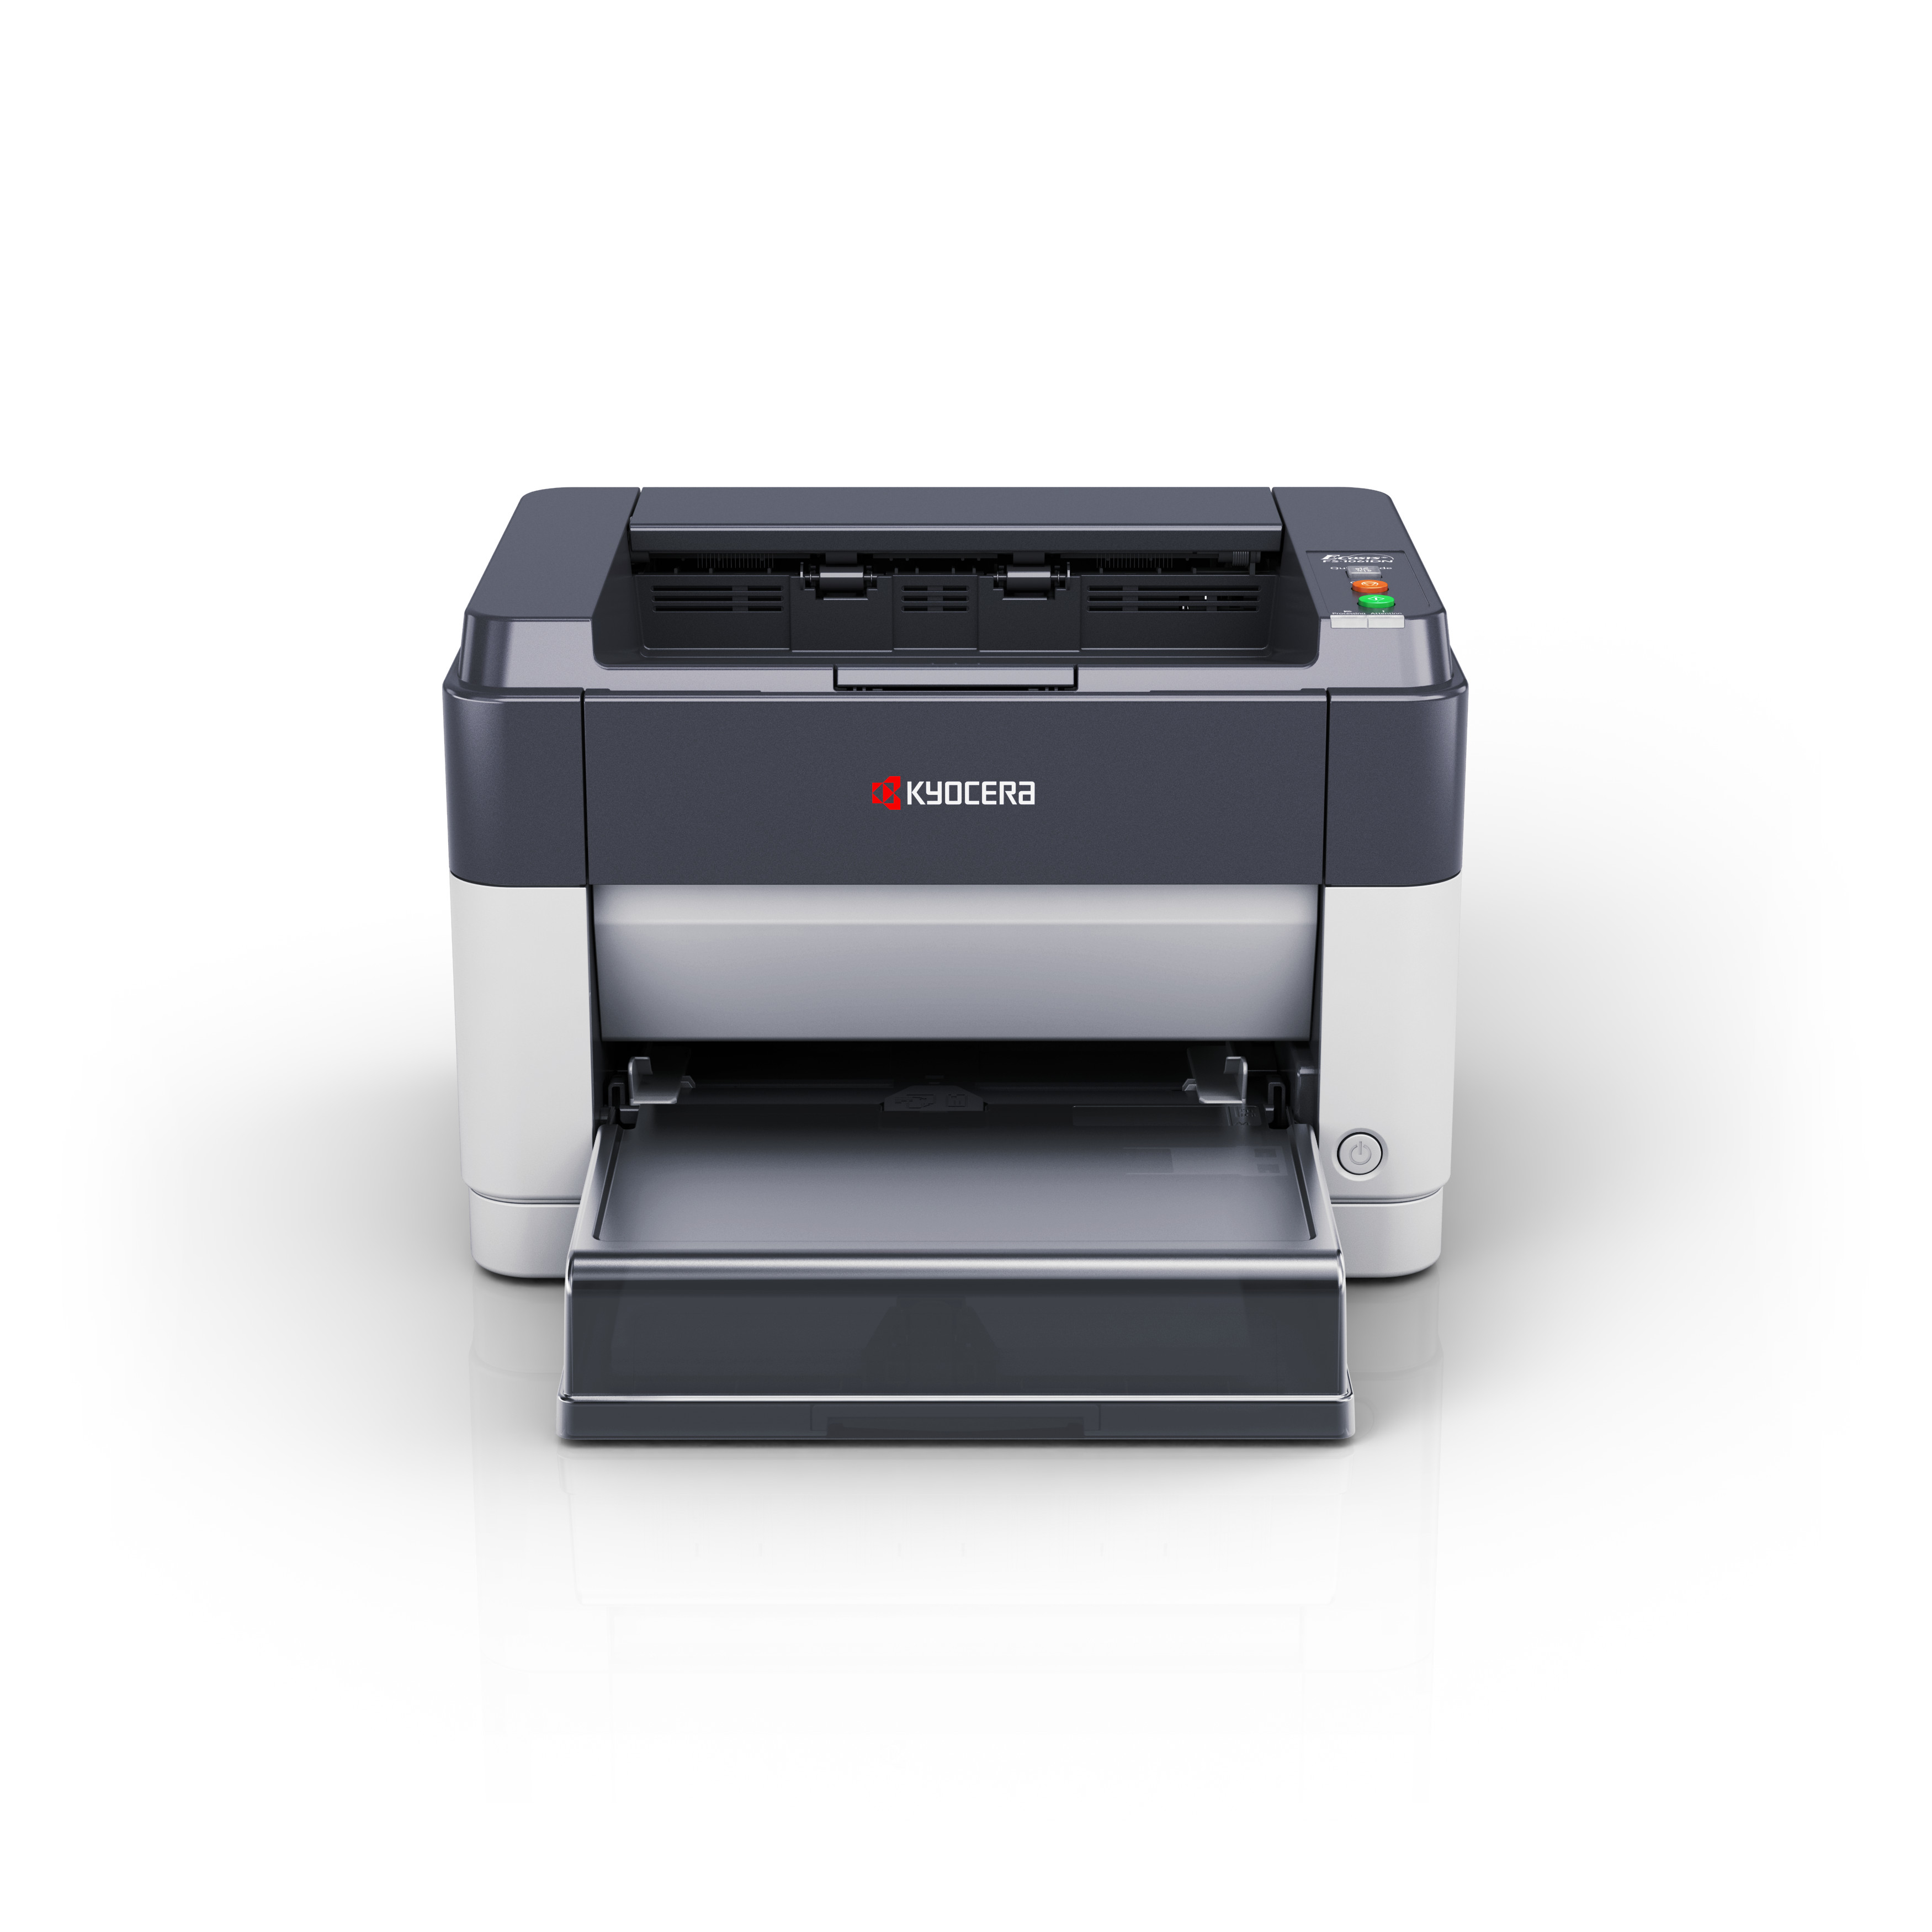 KYOCERA 870B61102M33NL2 laser printer